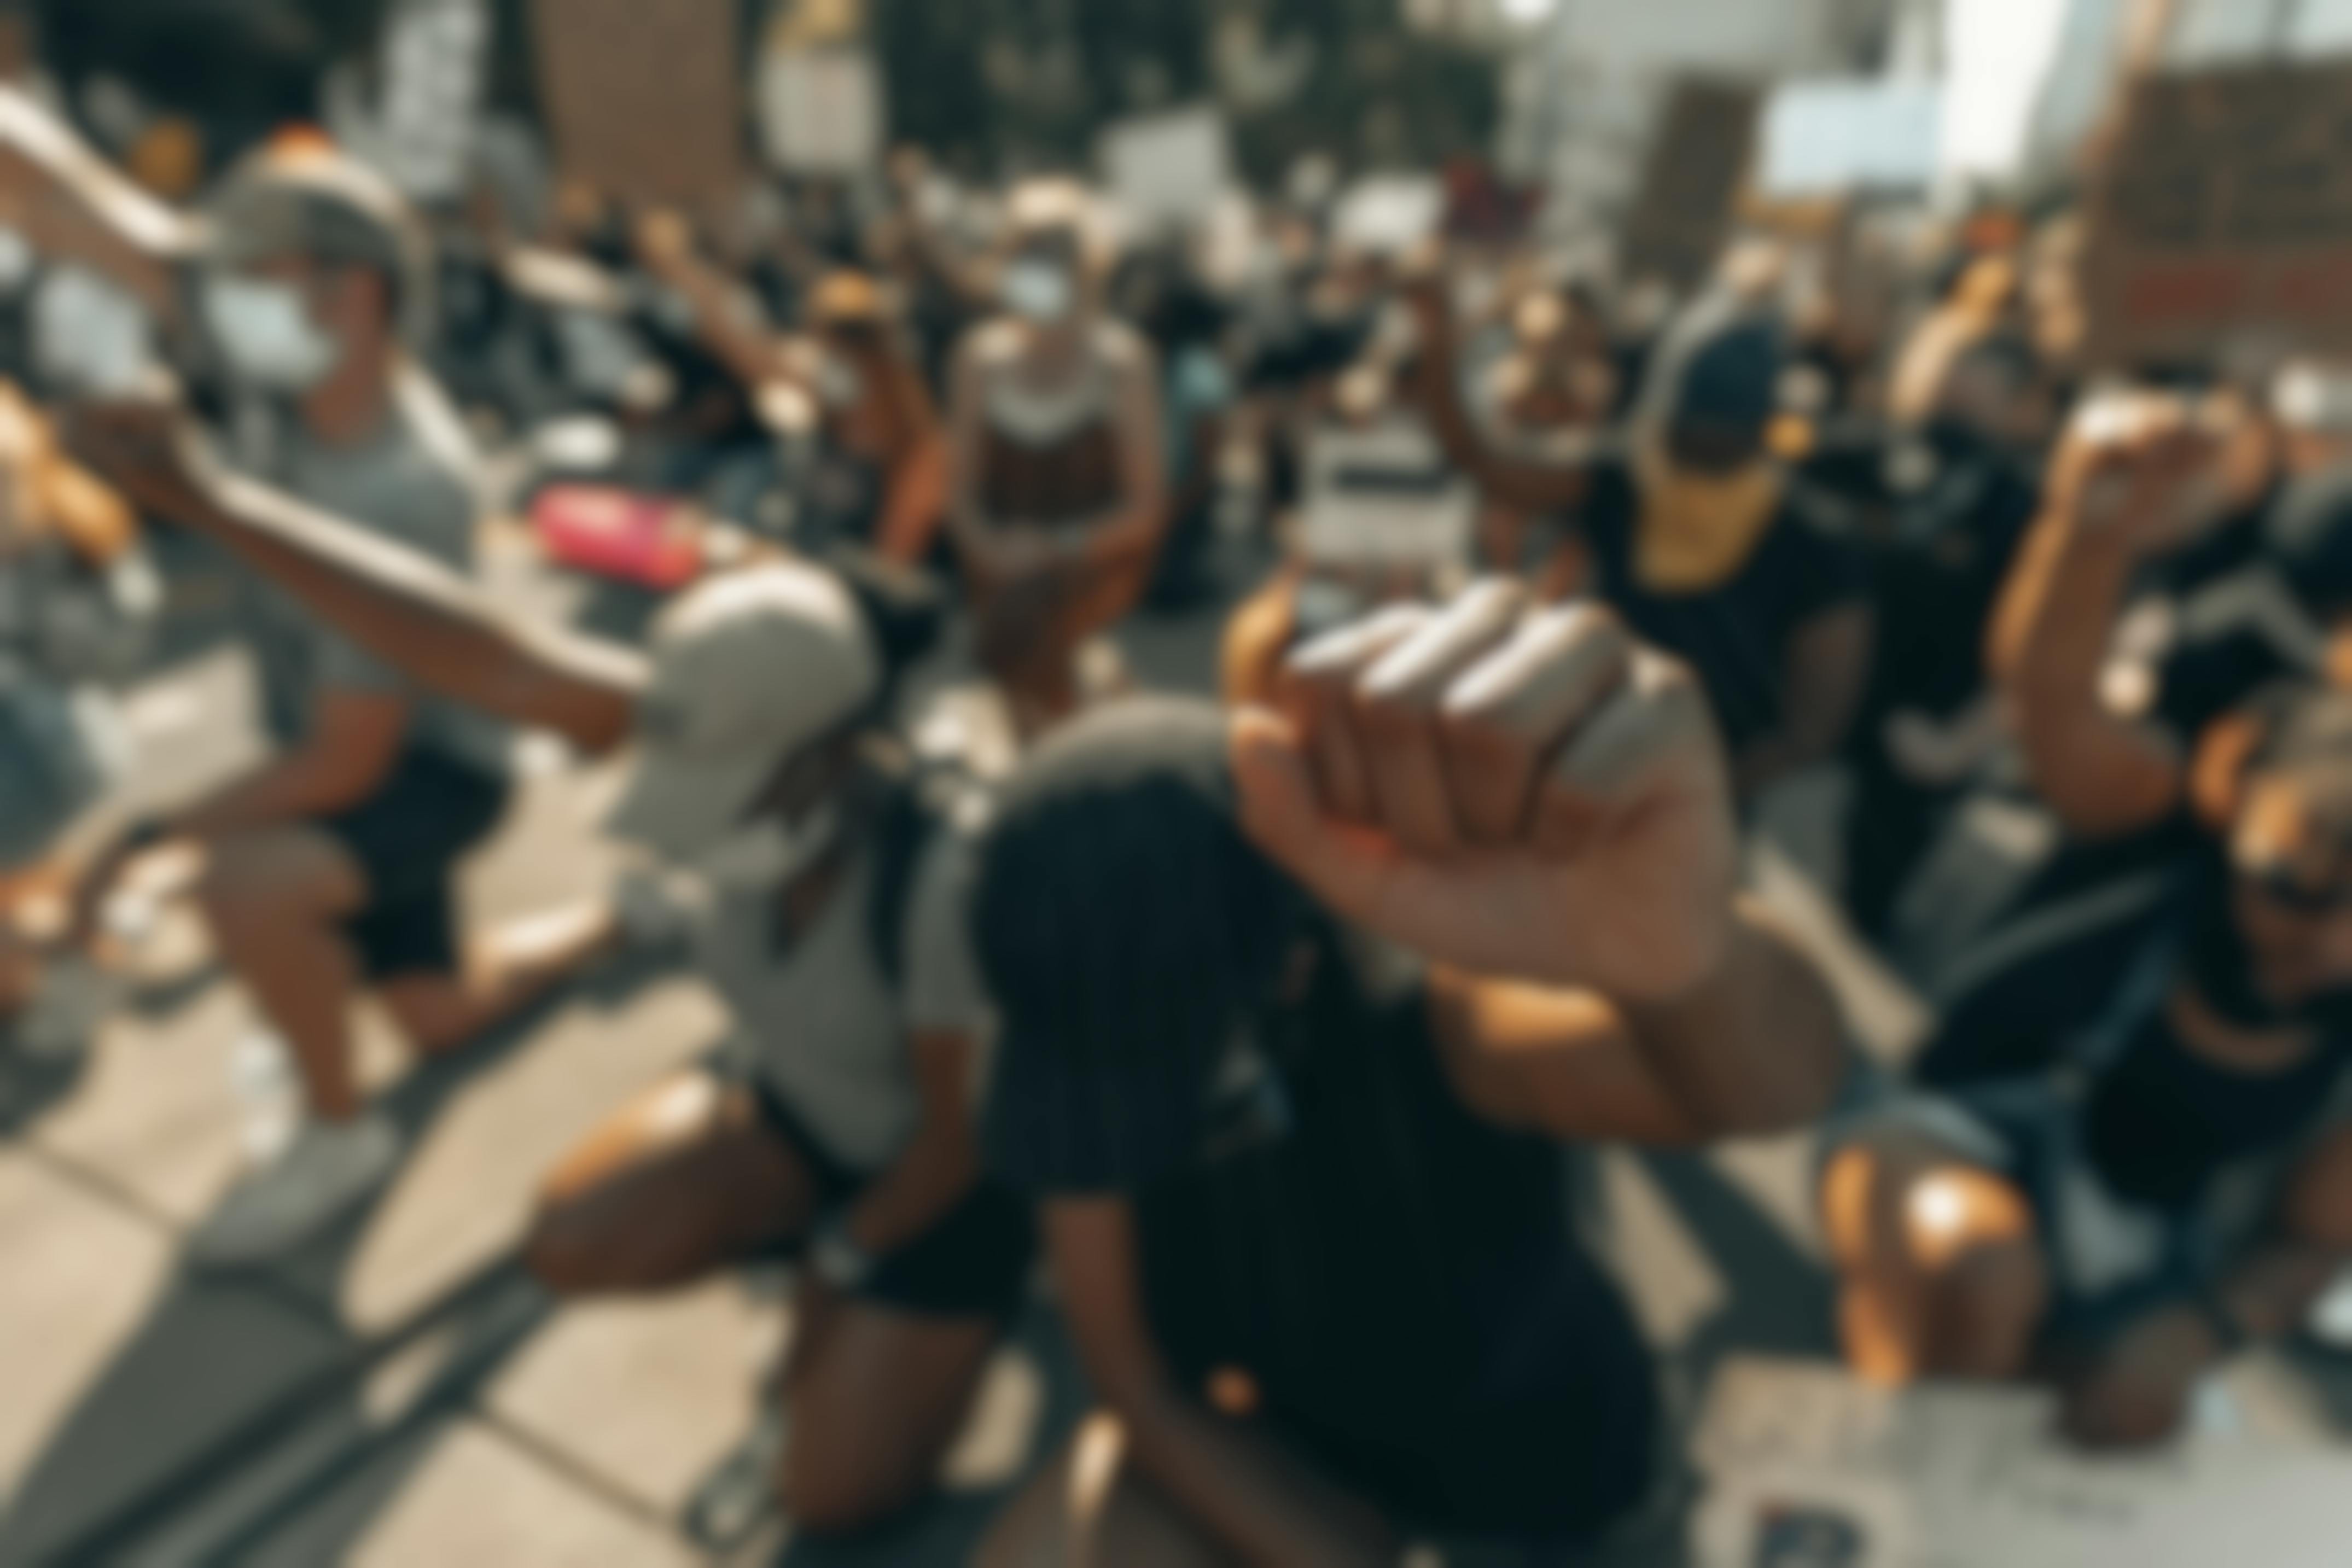 protestors kneeling with fist in air